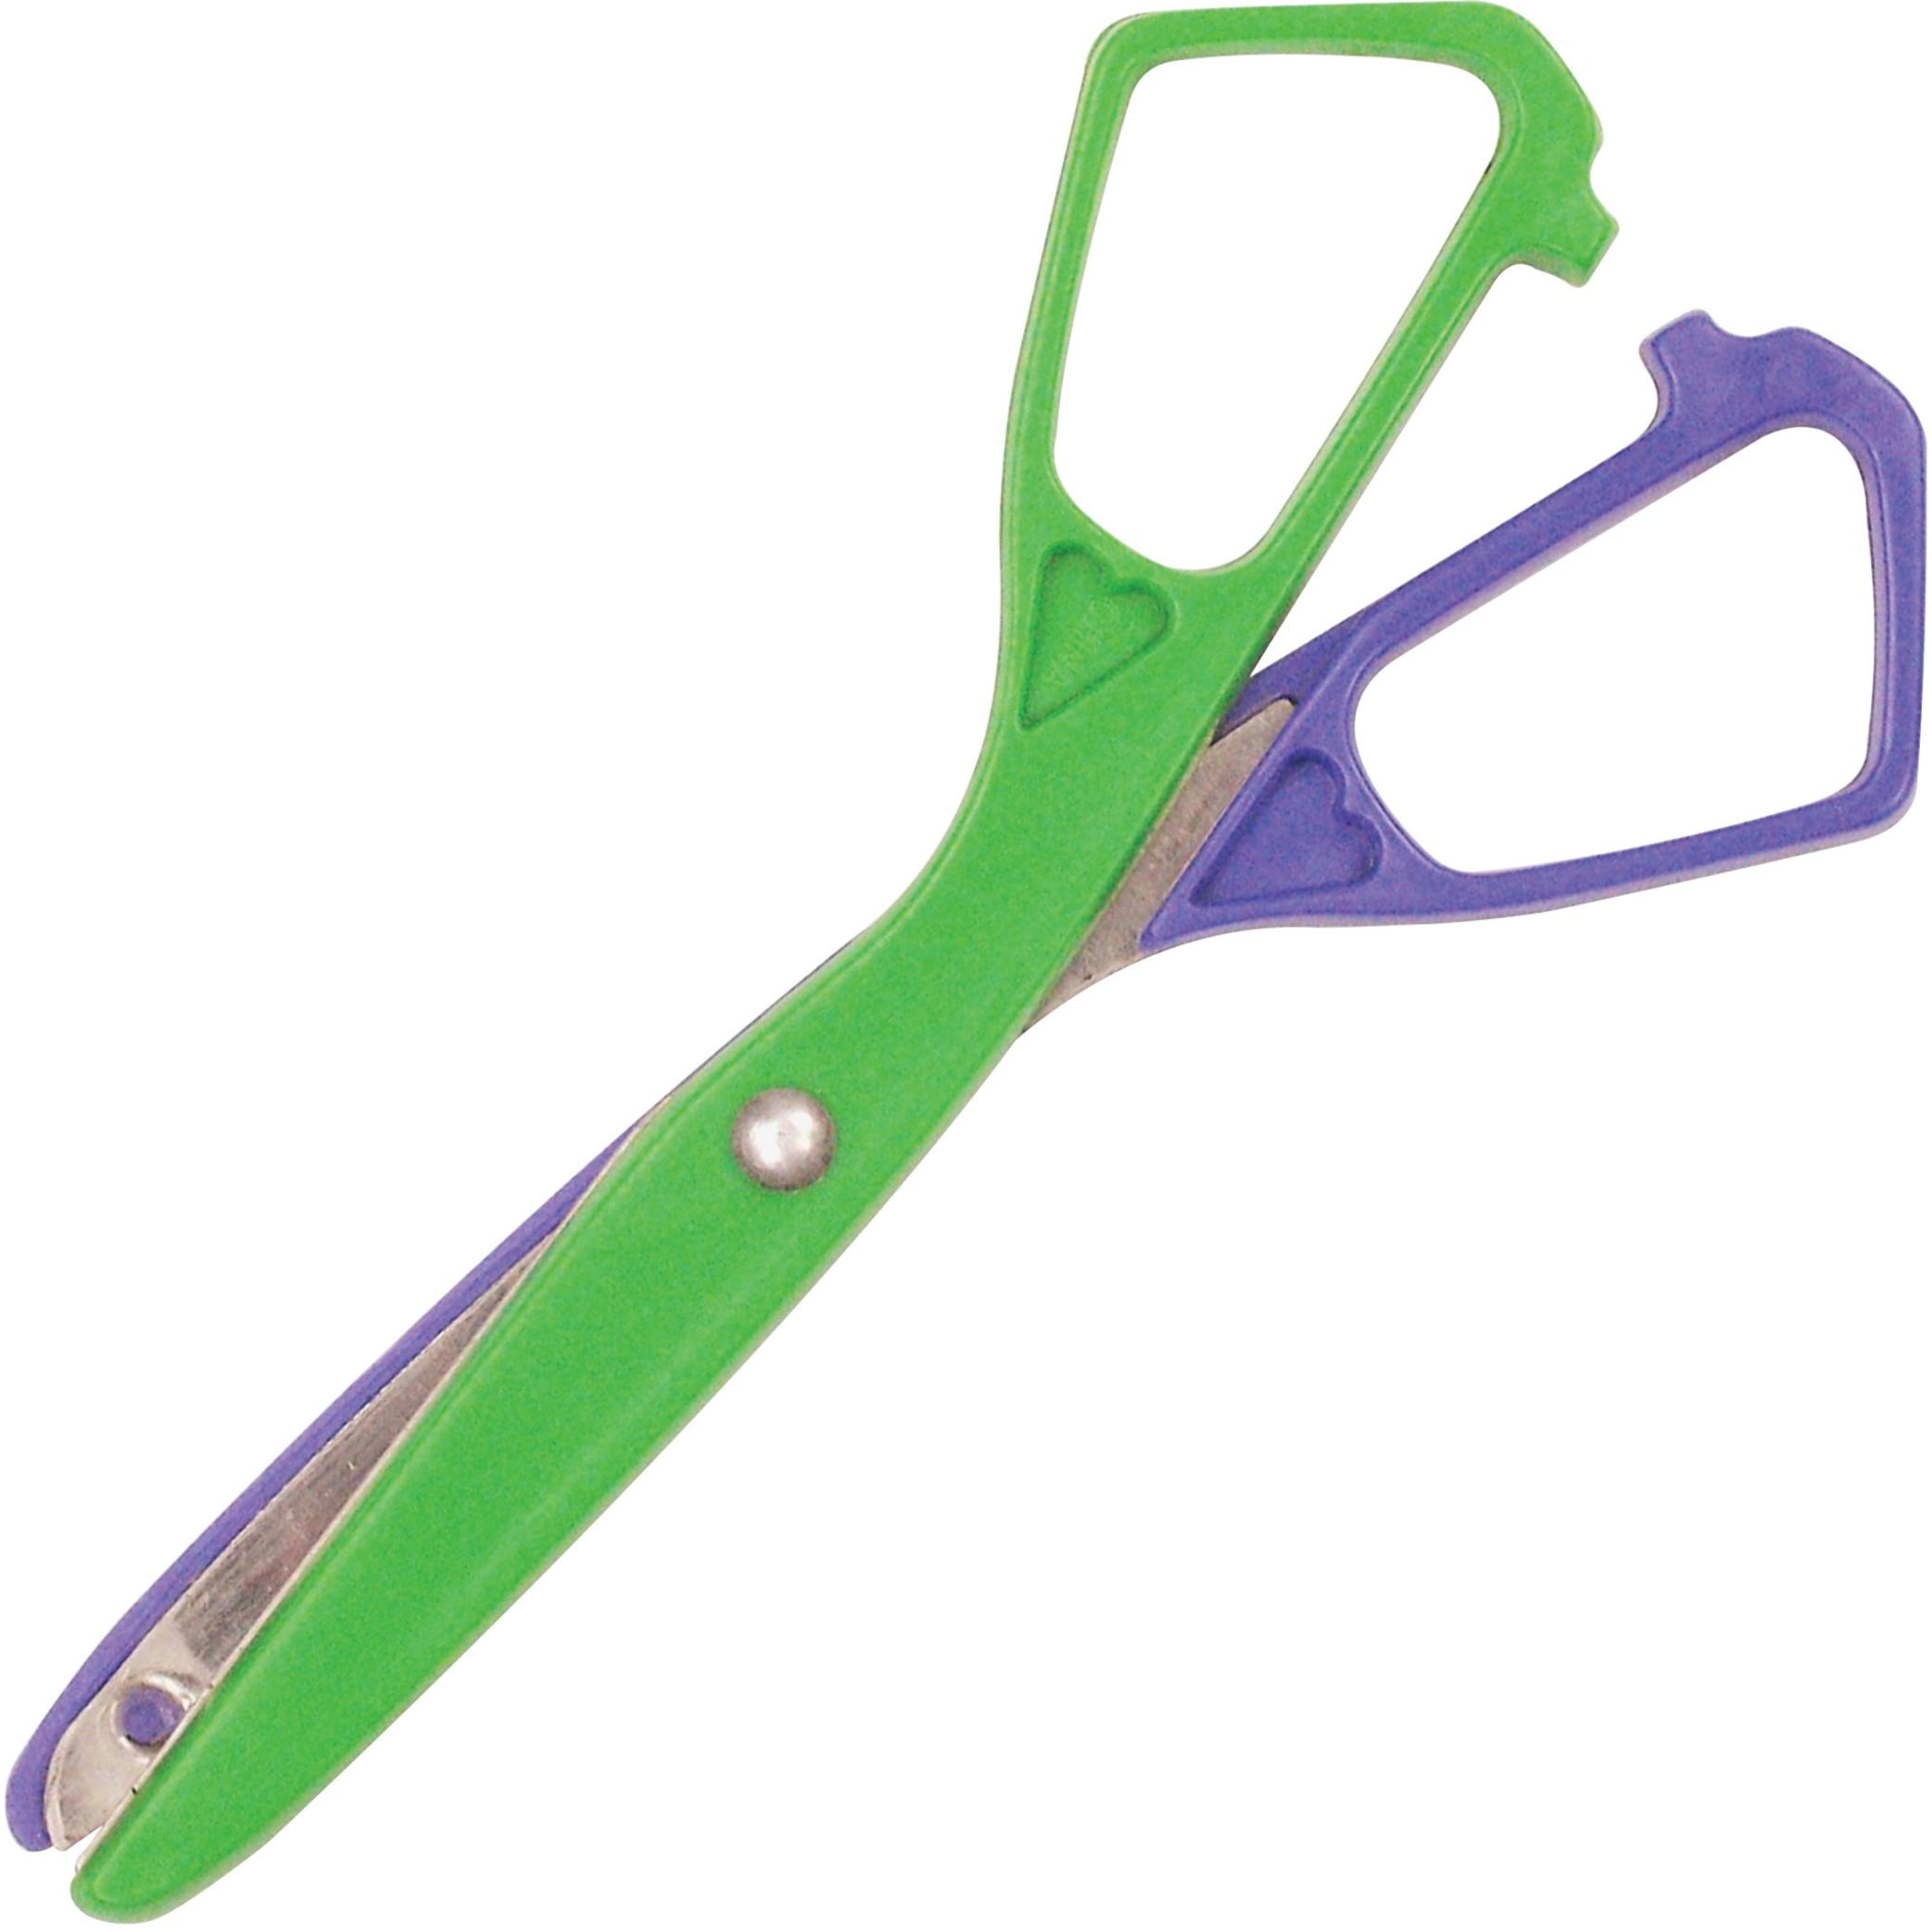 TeachersParadise - Westcott® All Nylon Child Safety Scissors, 5 Blunt,  Colors Vary - ACM15315